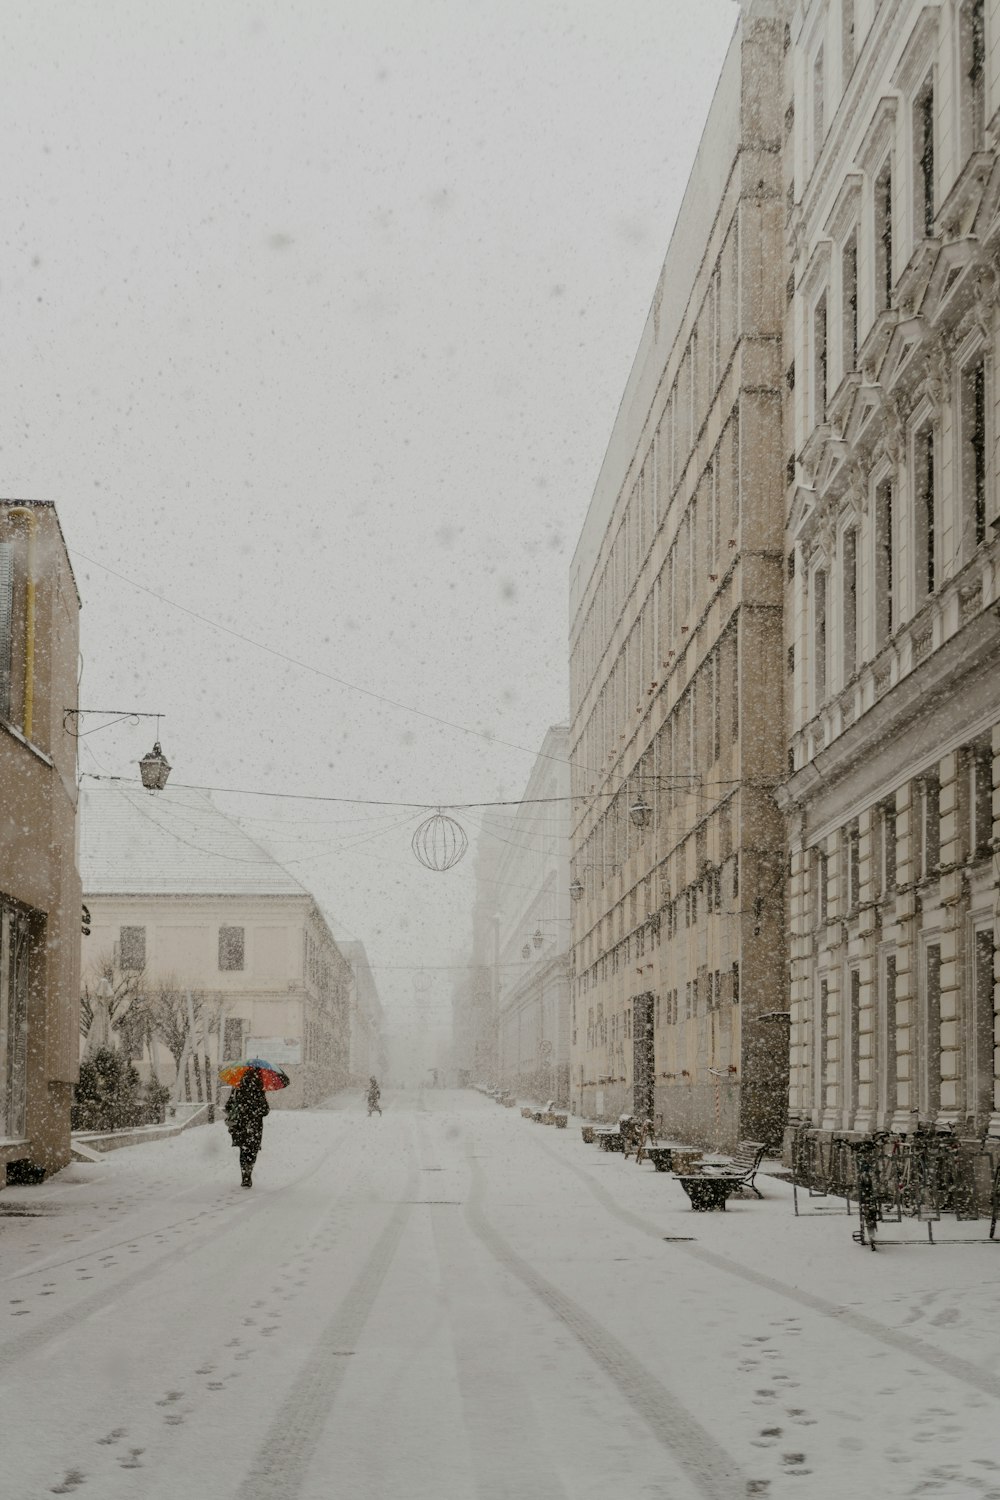 a person walking down a snowy street holding an umbrella